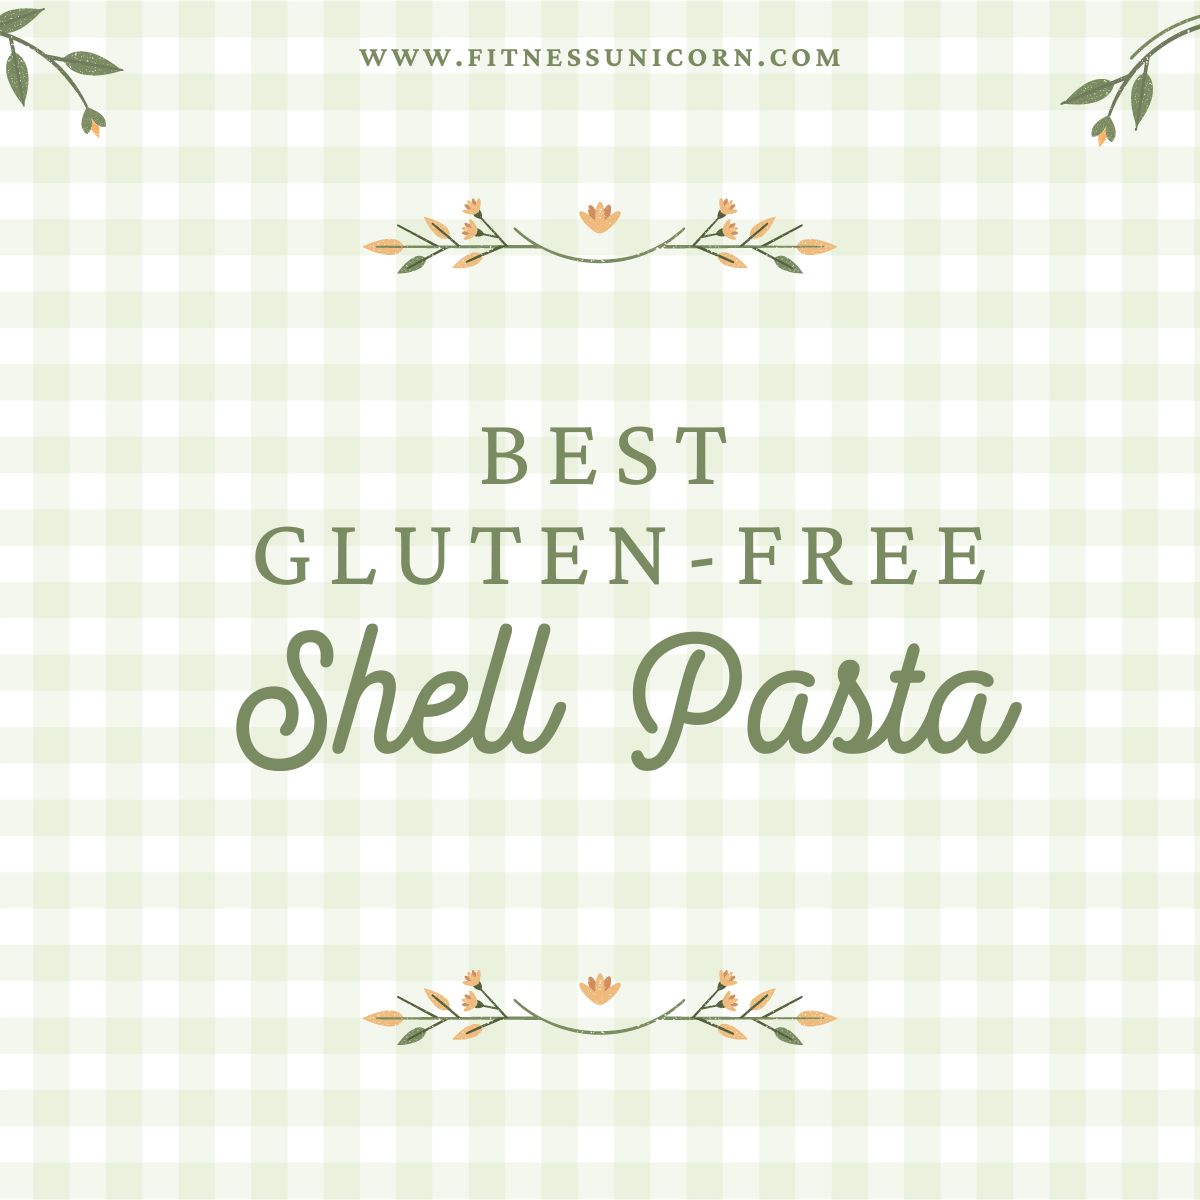 Best gluten free shell pasta